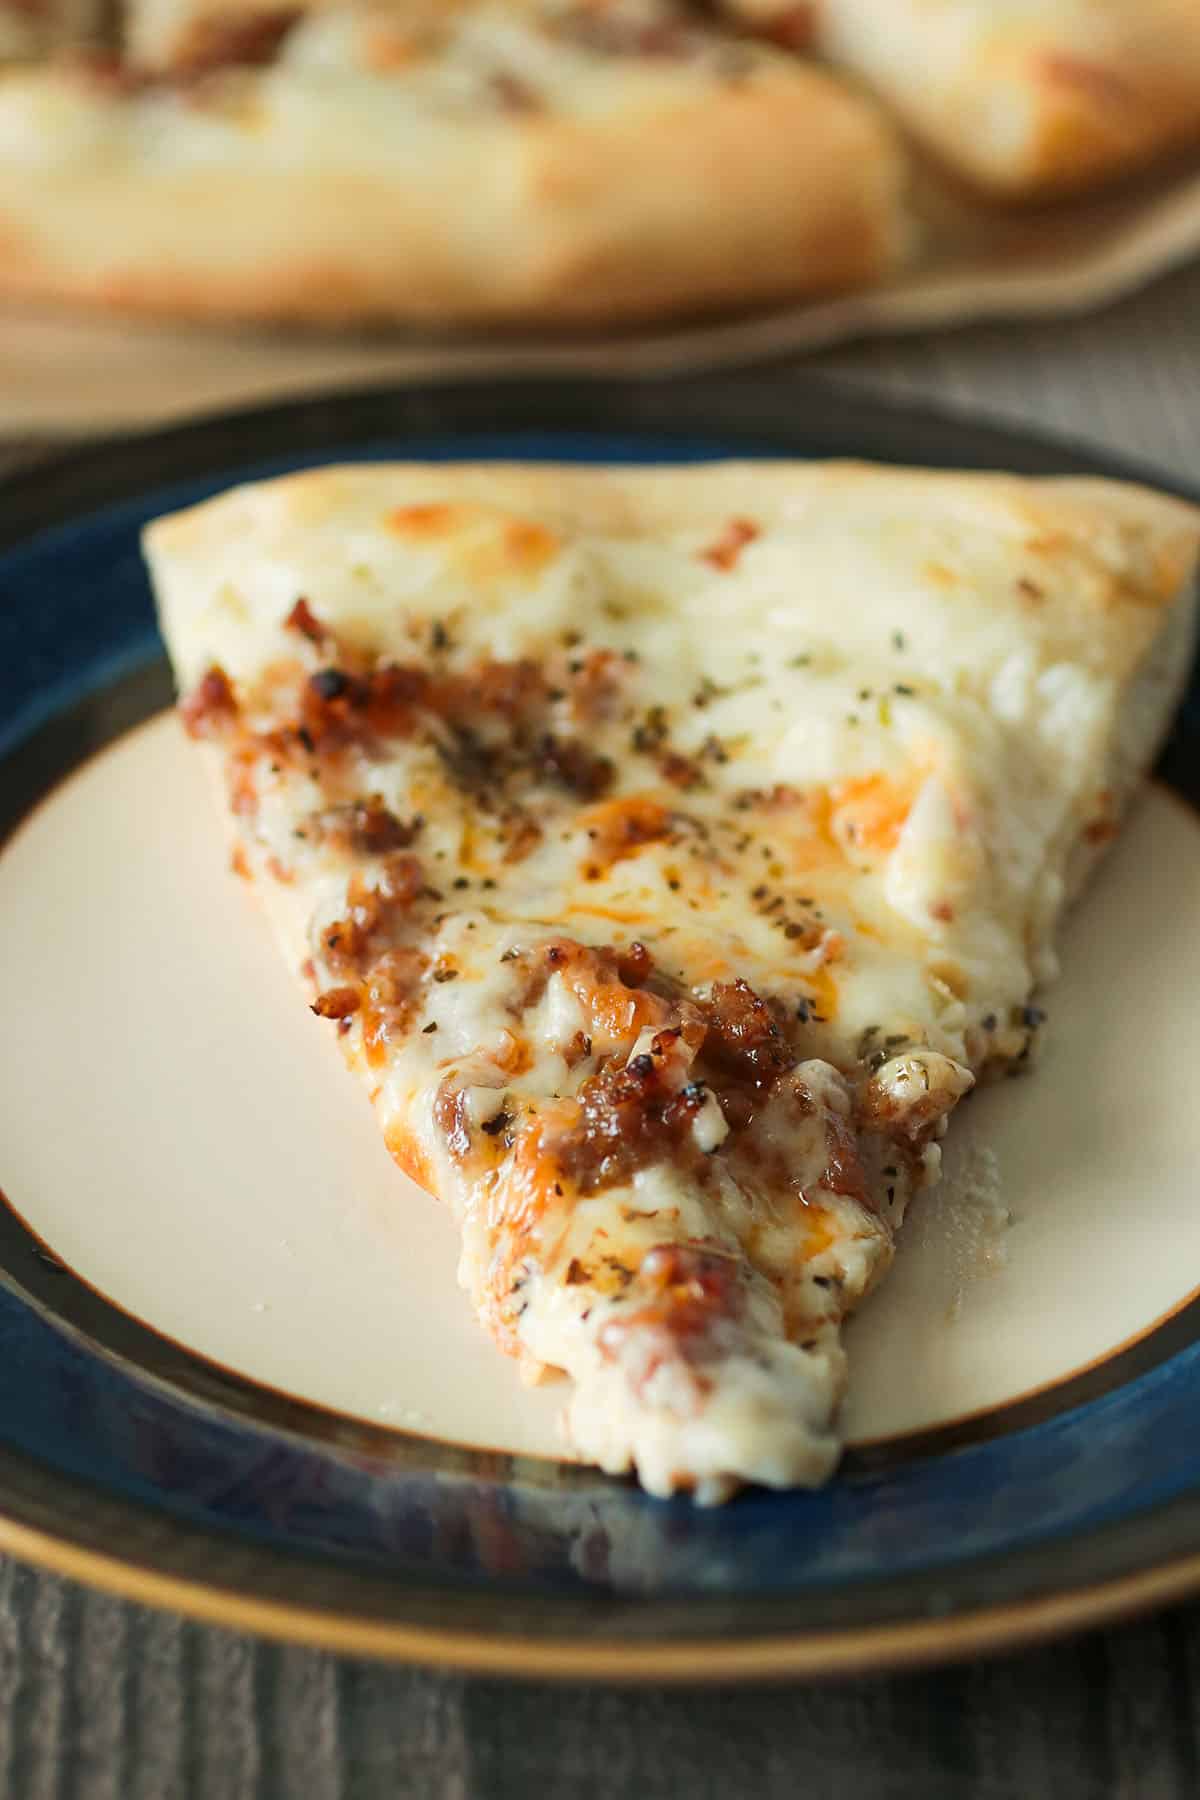 A slice of Italian sausage pizza.